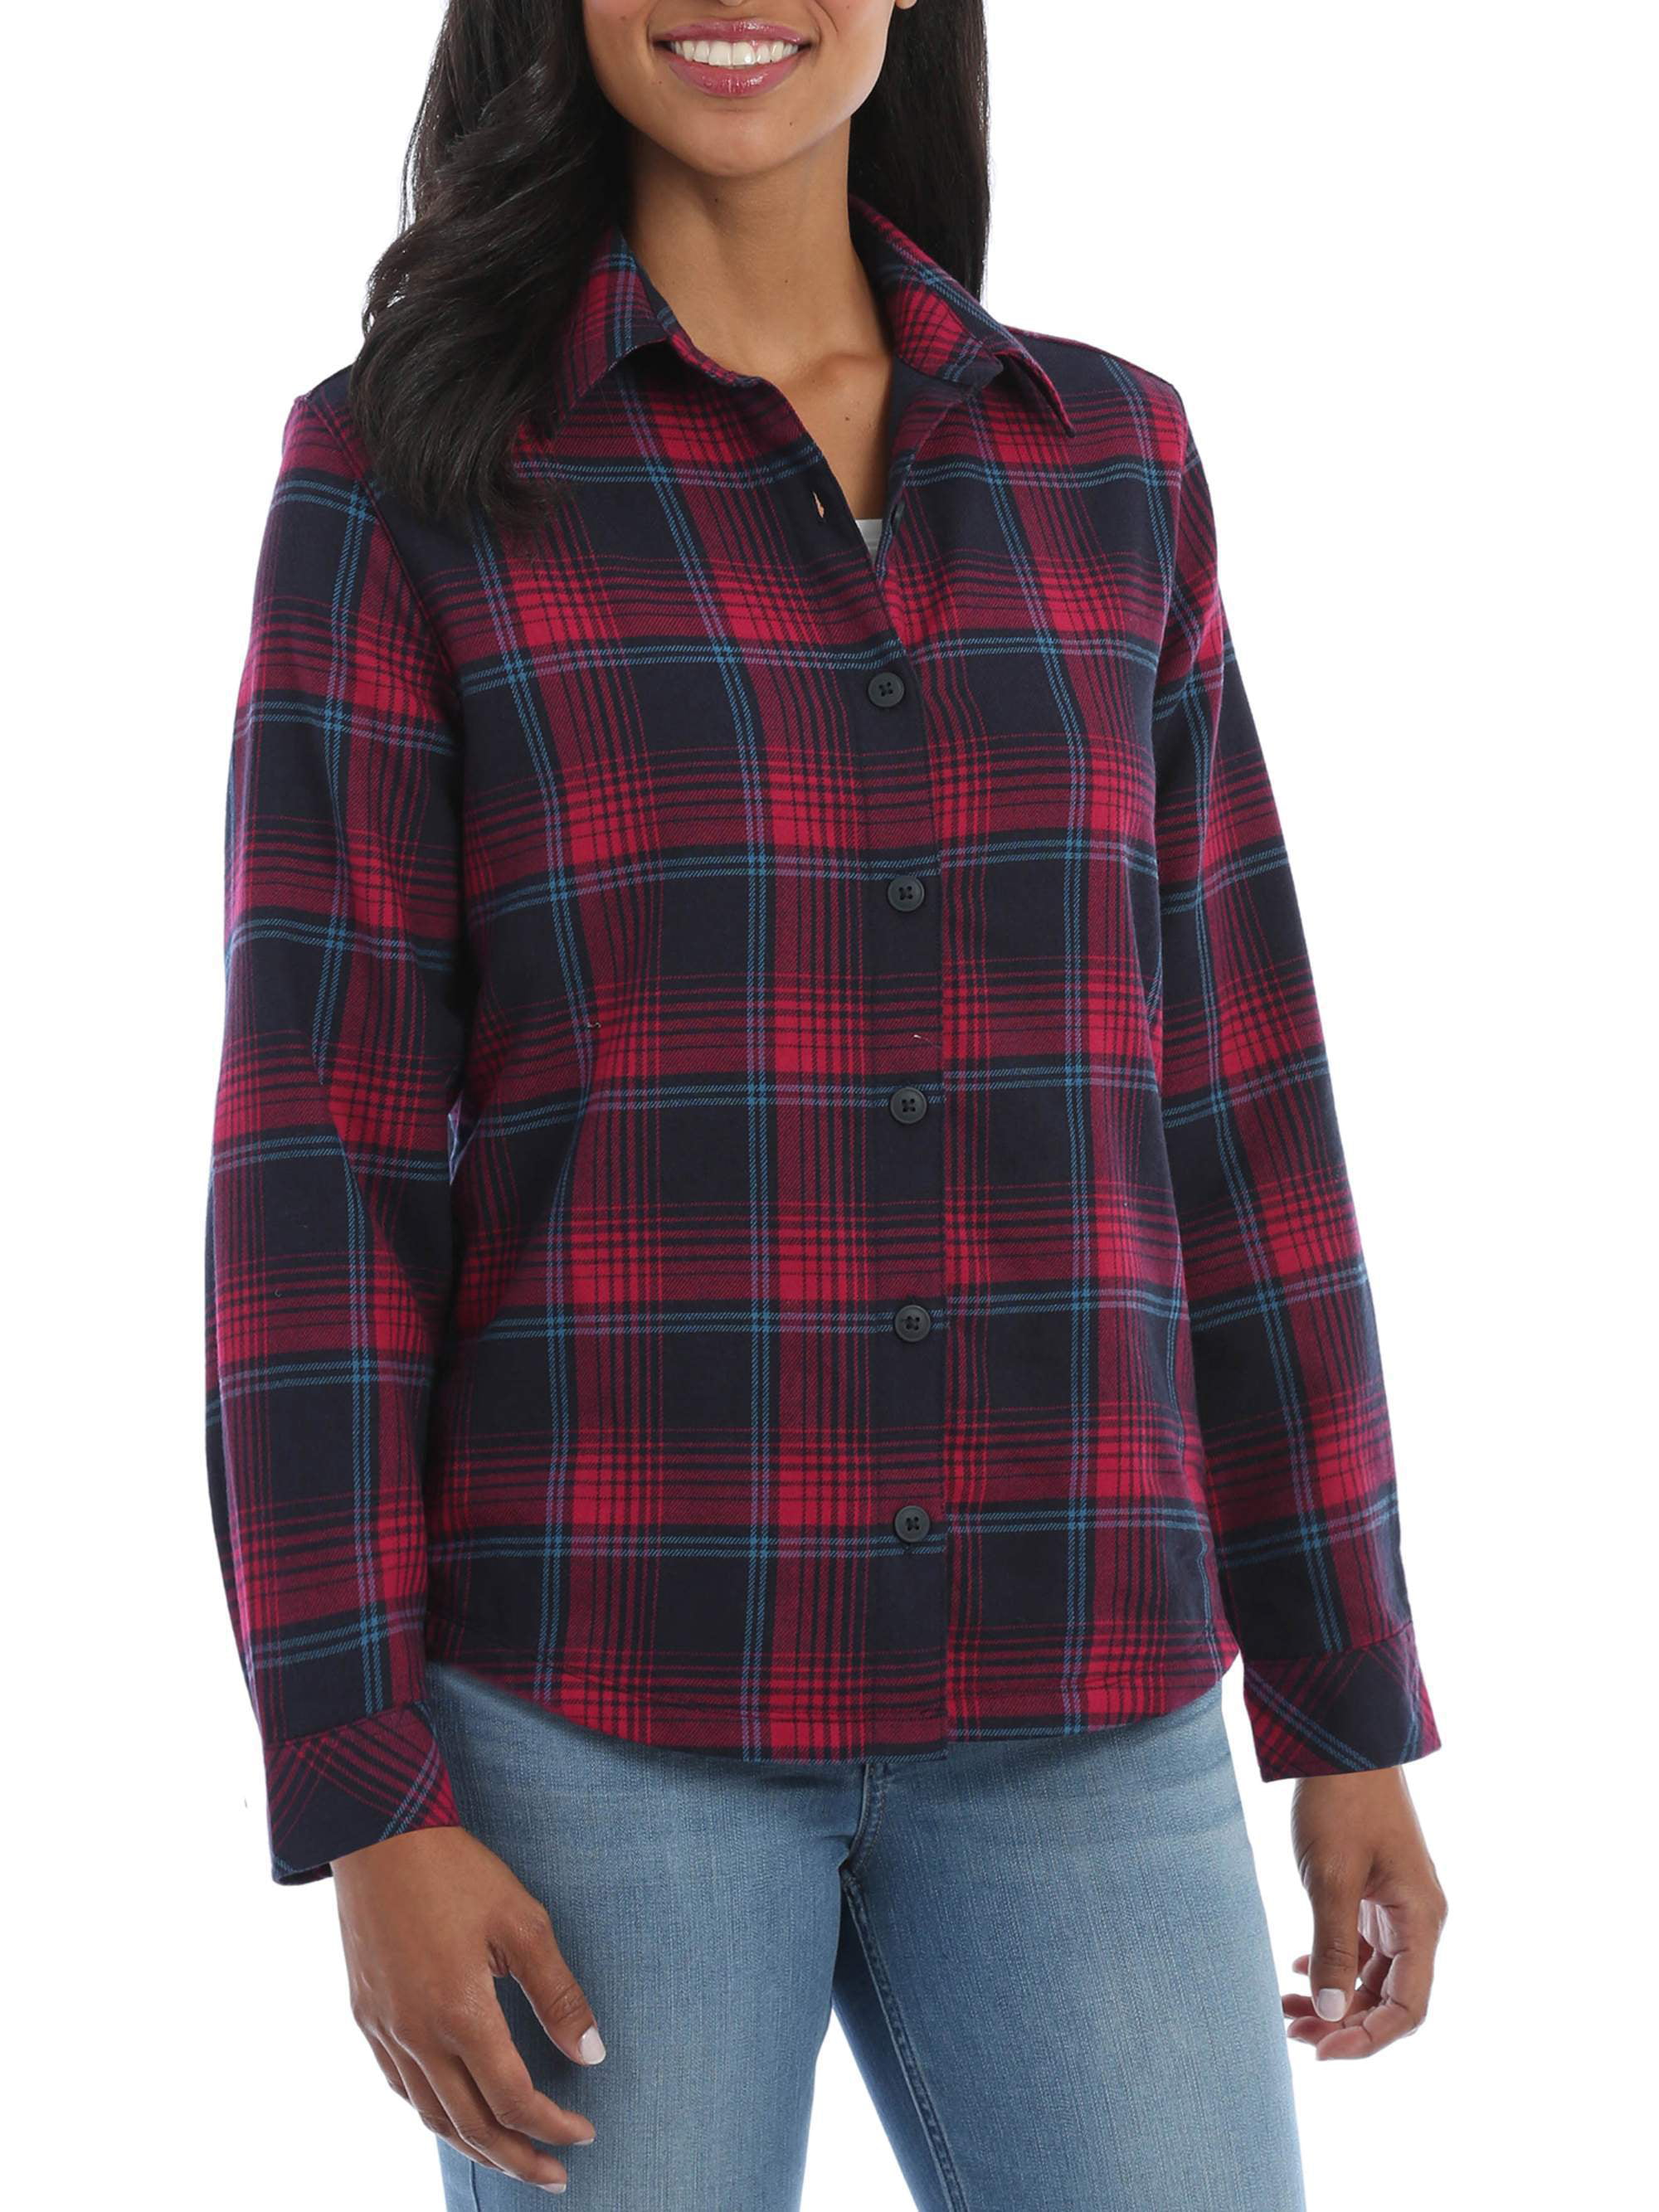 Lee Riders - Lee Riders Women's Fleece Lined Flannel Shirt - Walmart ...